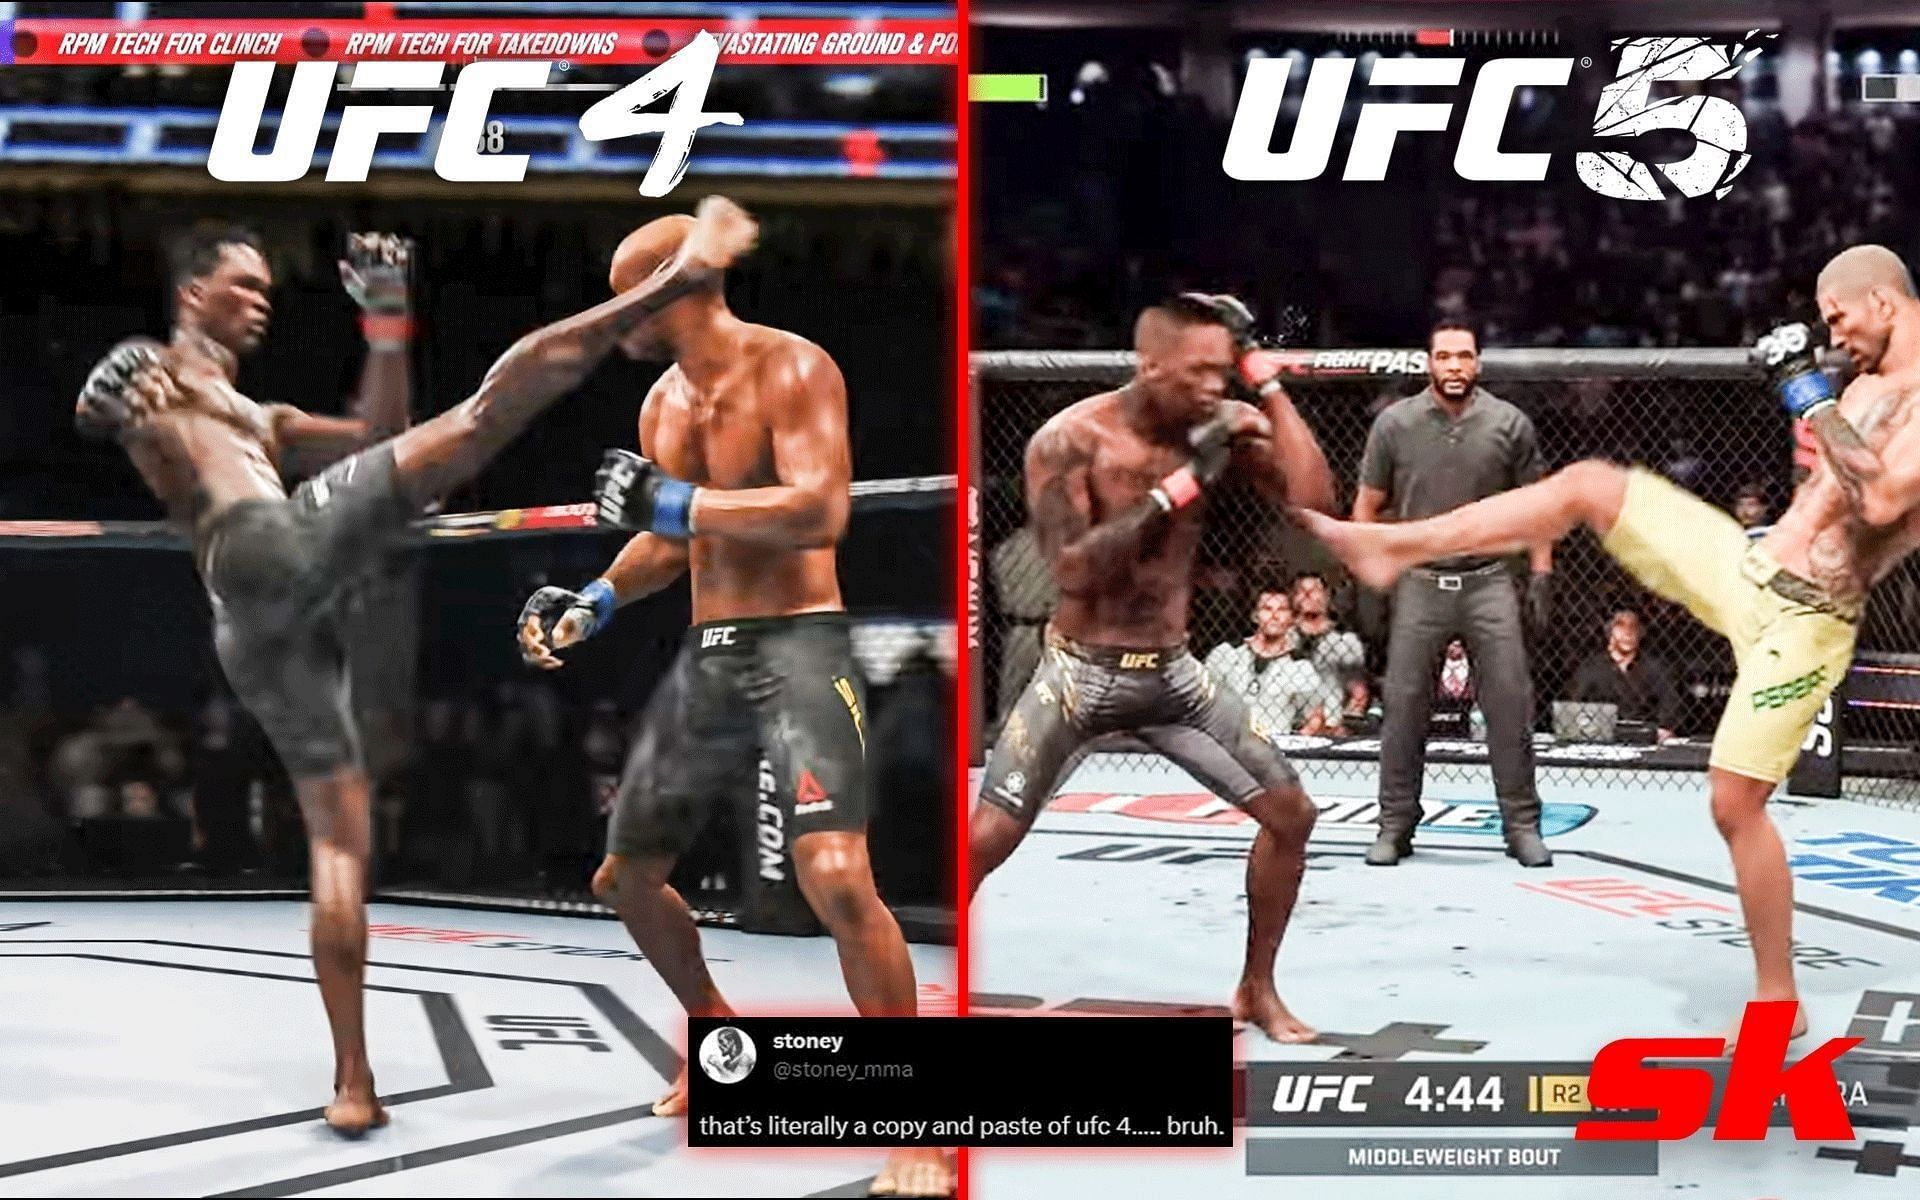 EA Sports UFC 5 Gameplay & Presentation Changes Based on Feedback